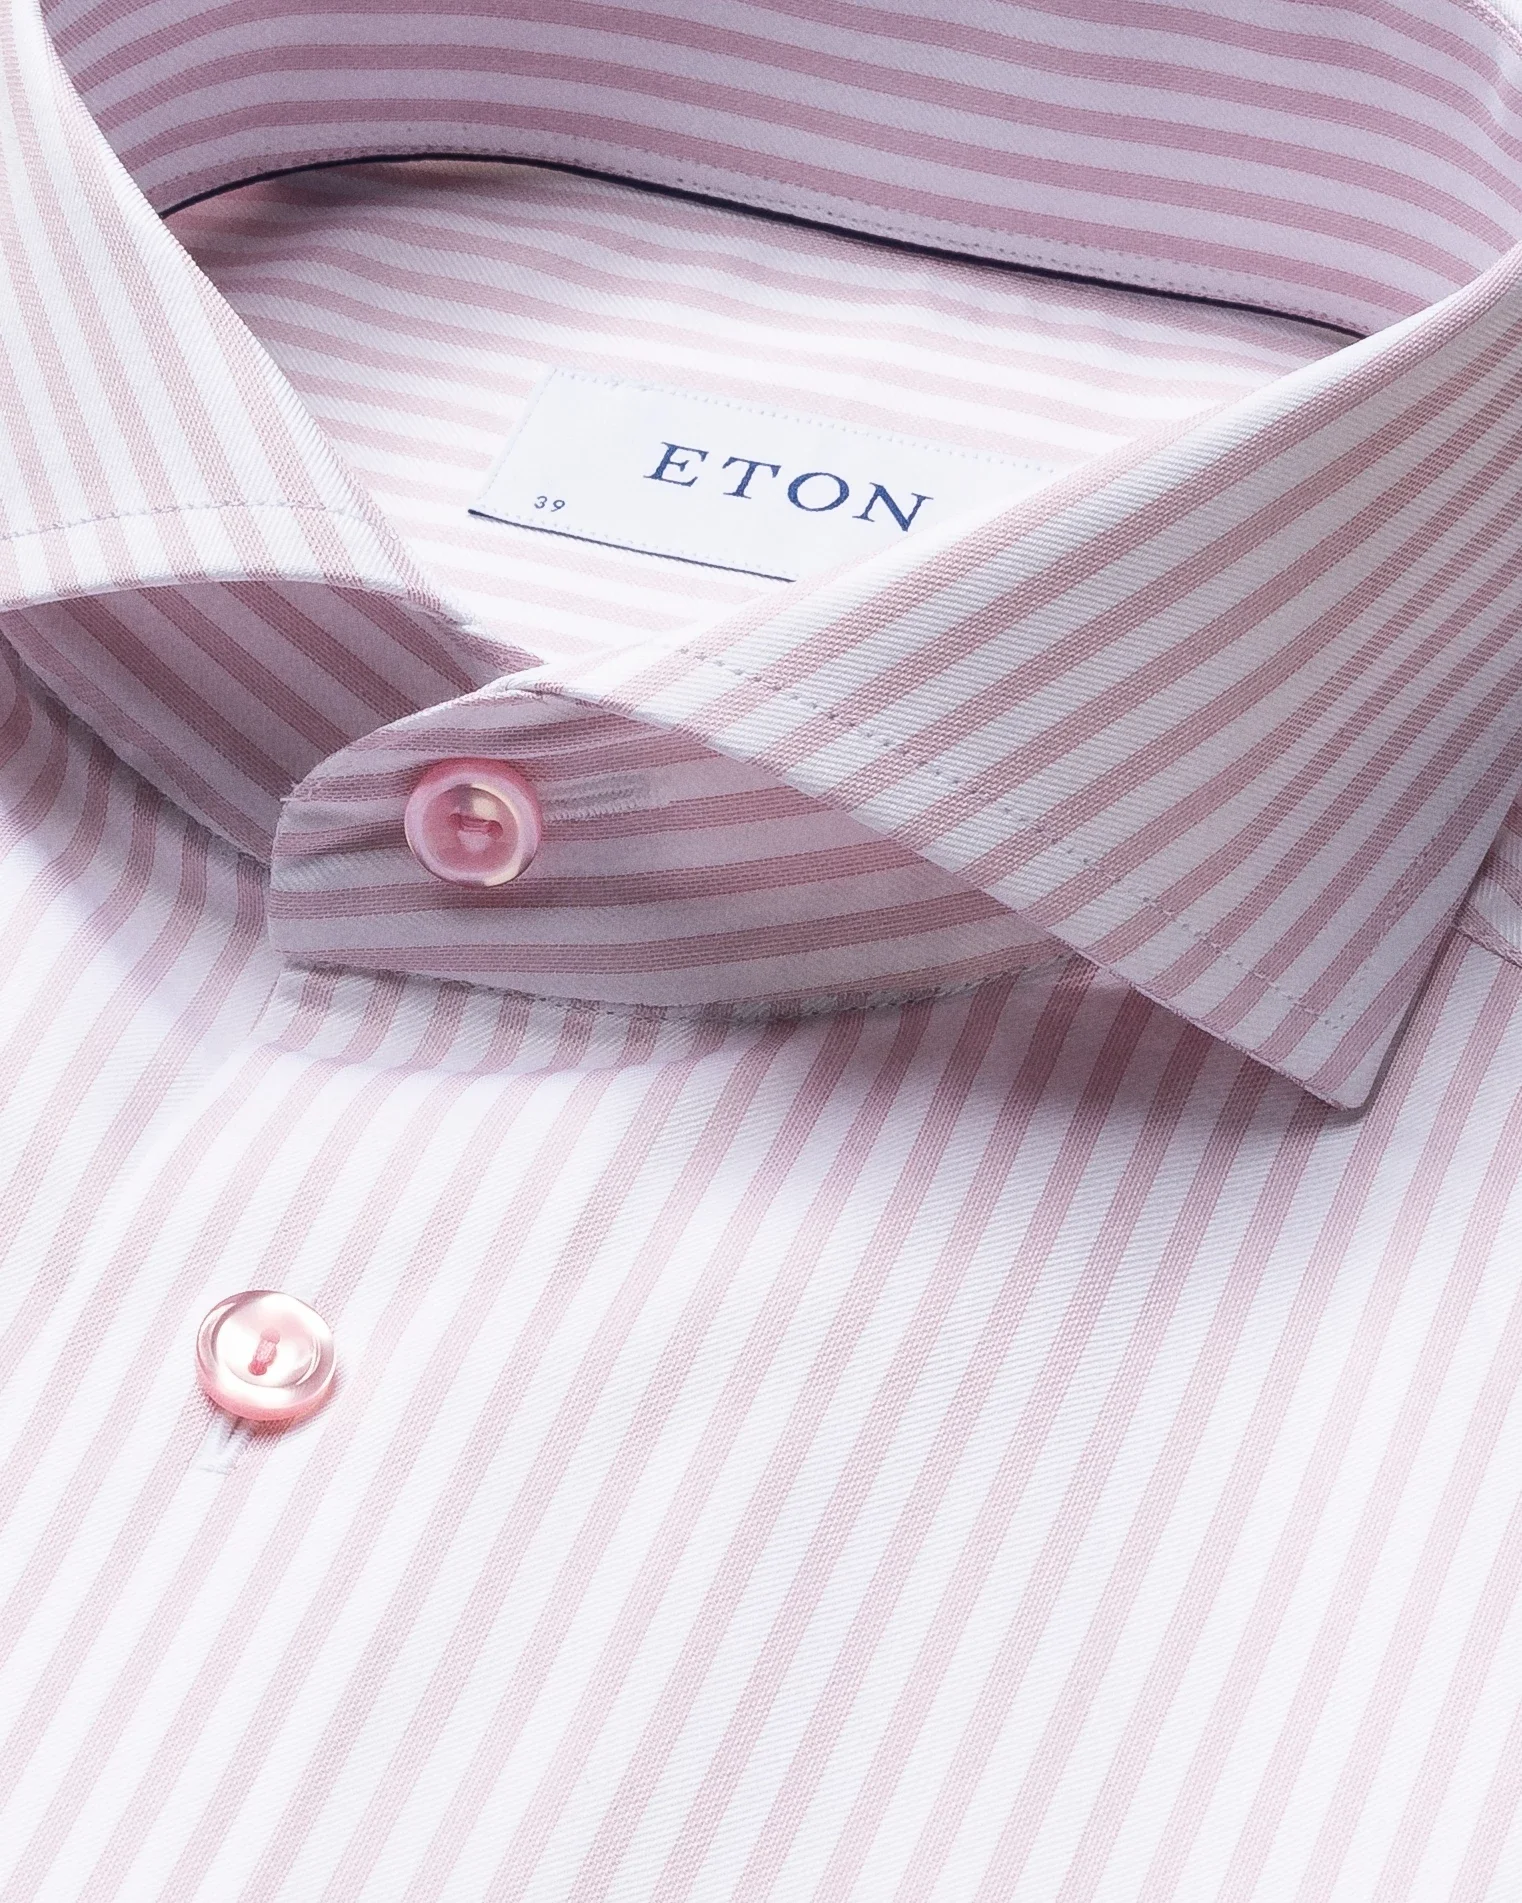 Eton - pink striped signature twill shirt extreme cut away